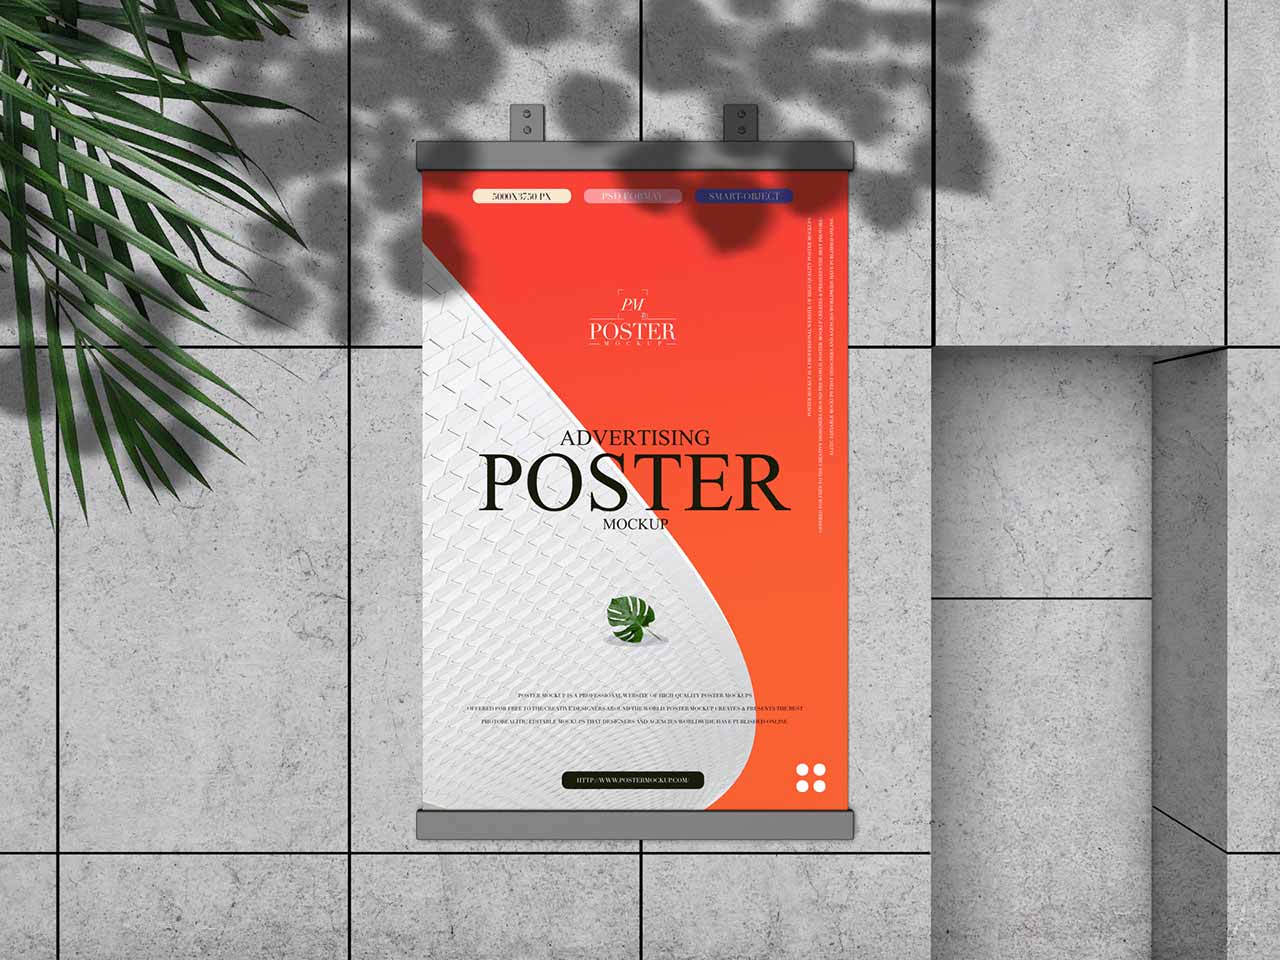 Download 50 Free Poster Mockups Psd Templates On Pixelbuddha PSD Mockup Templates